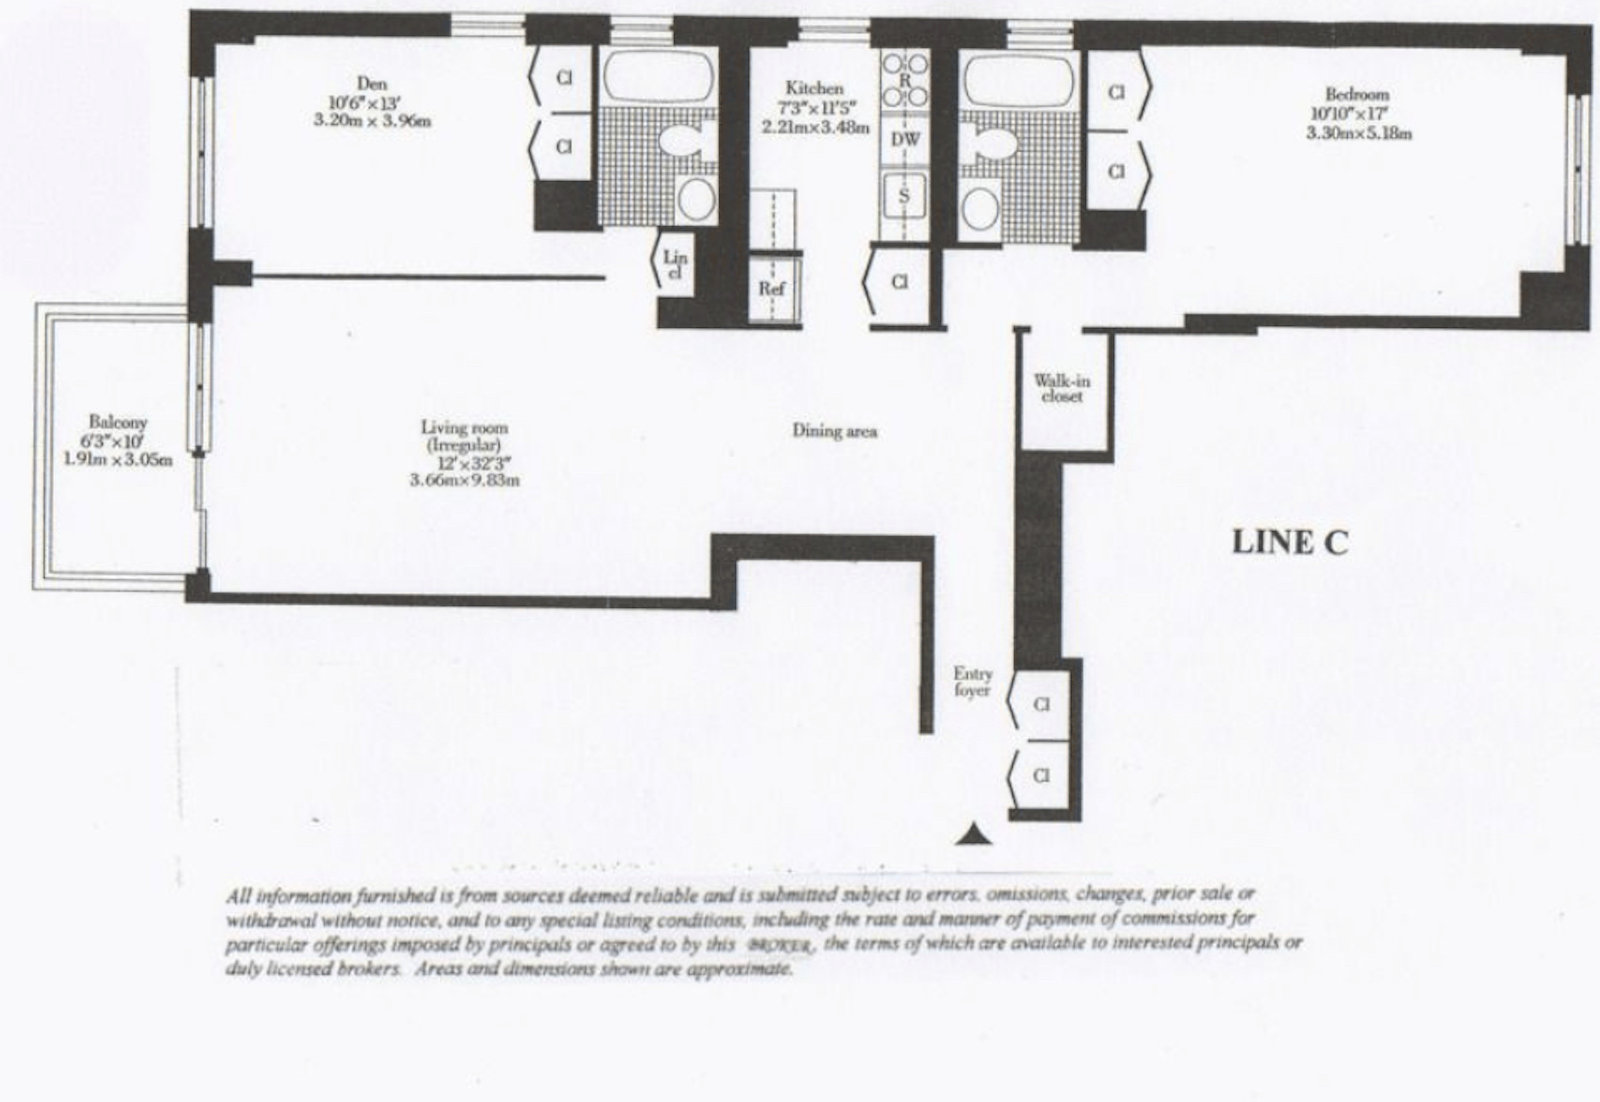 Floorplan for 347 West 57th Street, 24C